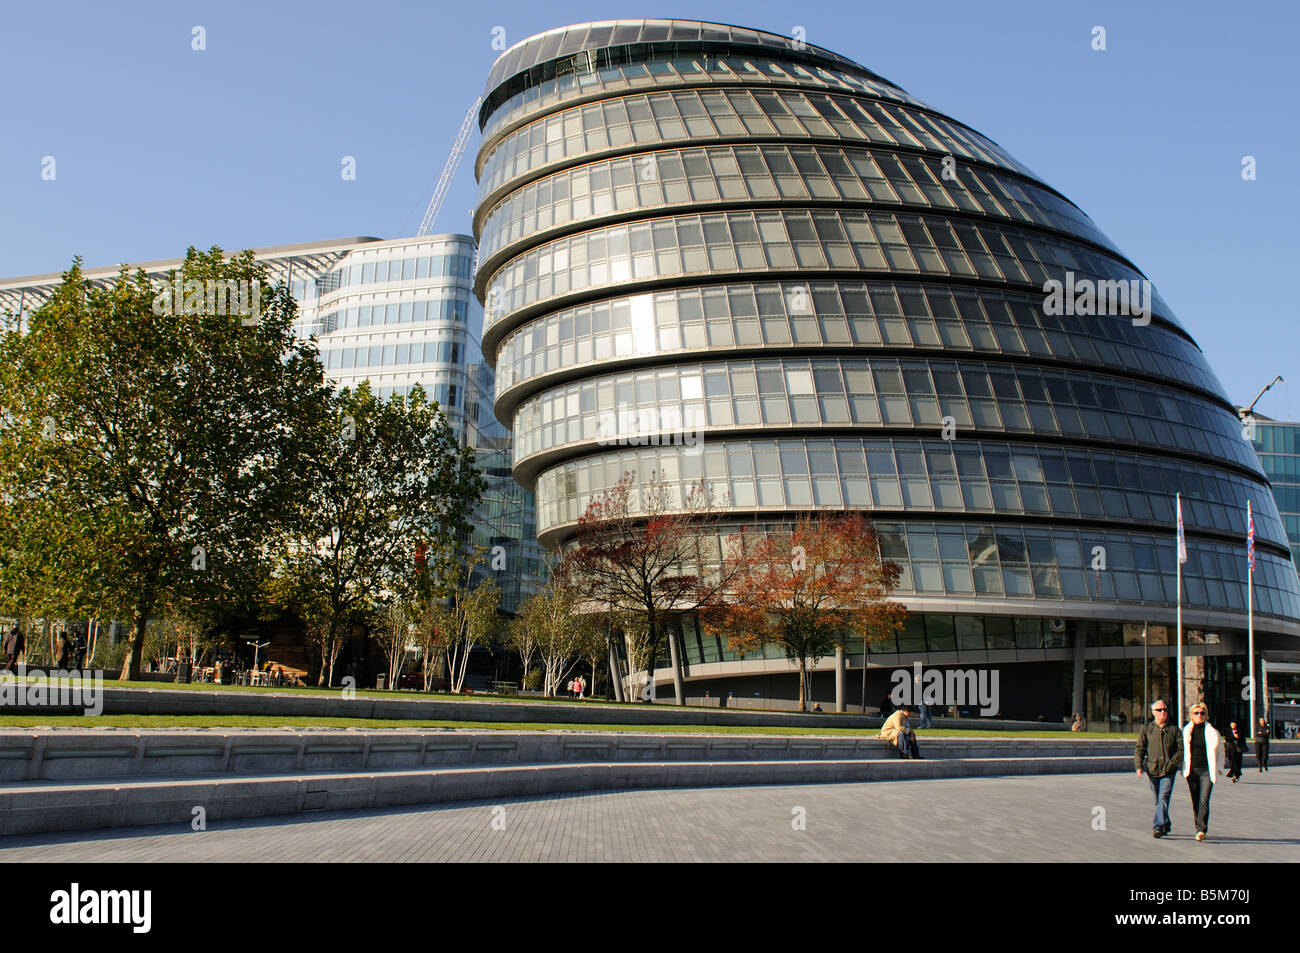 Edificio de la Asamblea de Londres Greater London Authority GLA Londres Reino unido Foto de stock